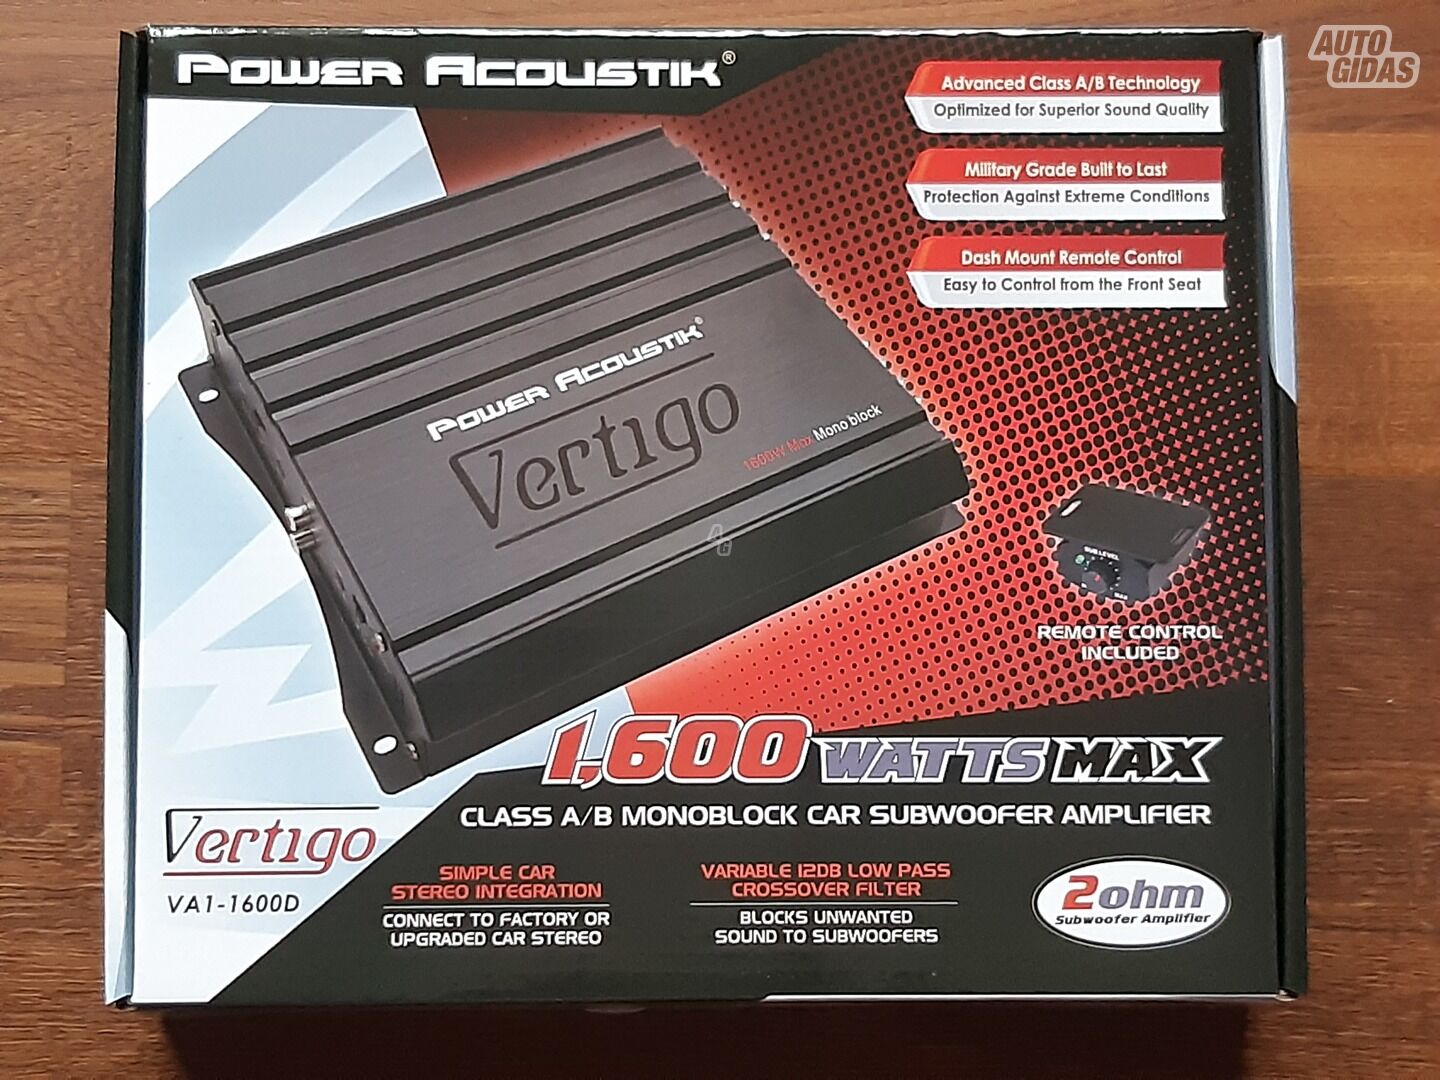 Power Acoustik Vertigo VA1-1600D Усилитель